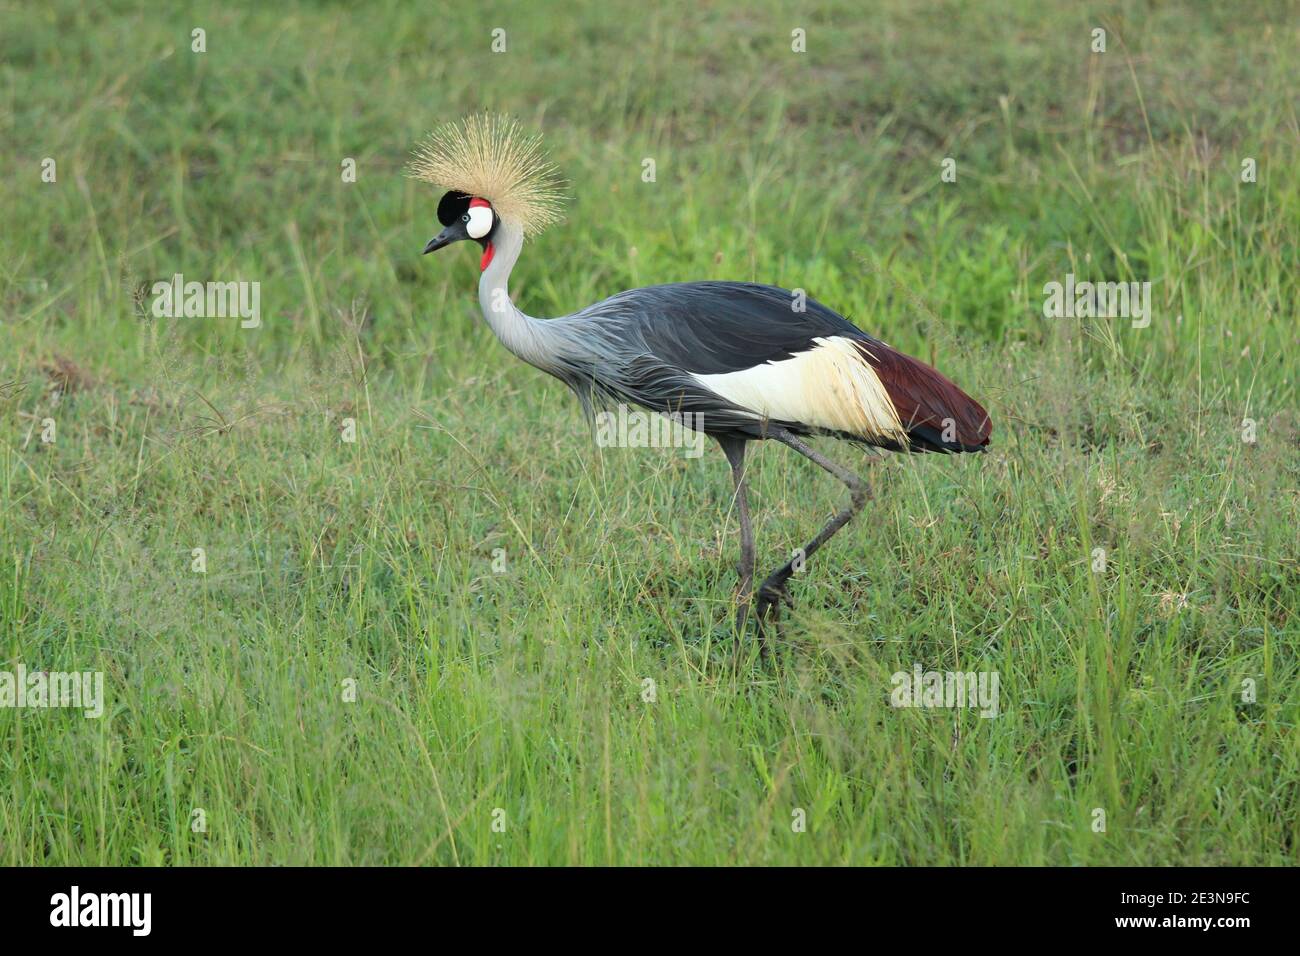 A grey crowned crane, the national bird of Uganda, walks through the grass in the Masai Mara in Kenya Stock Photo